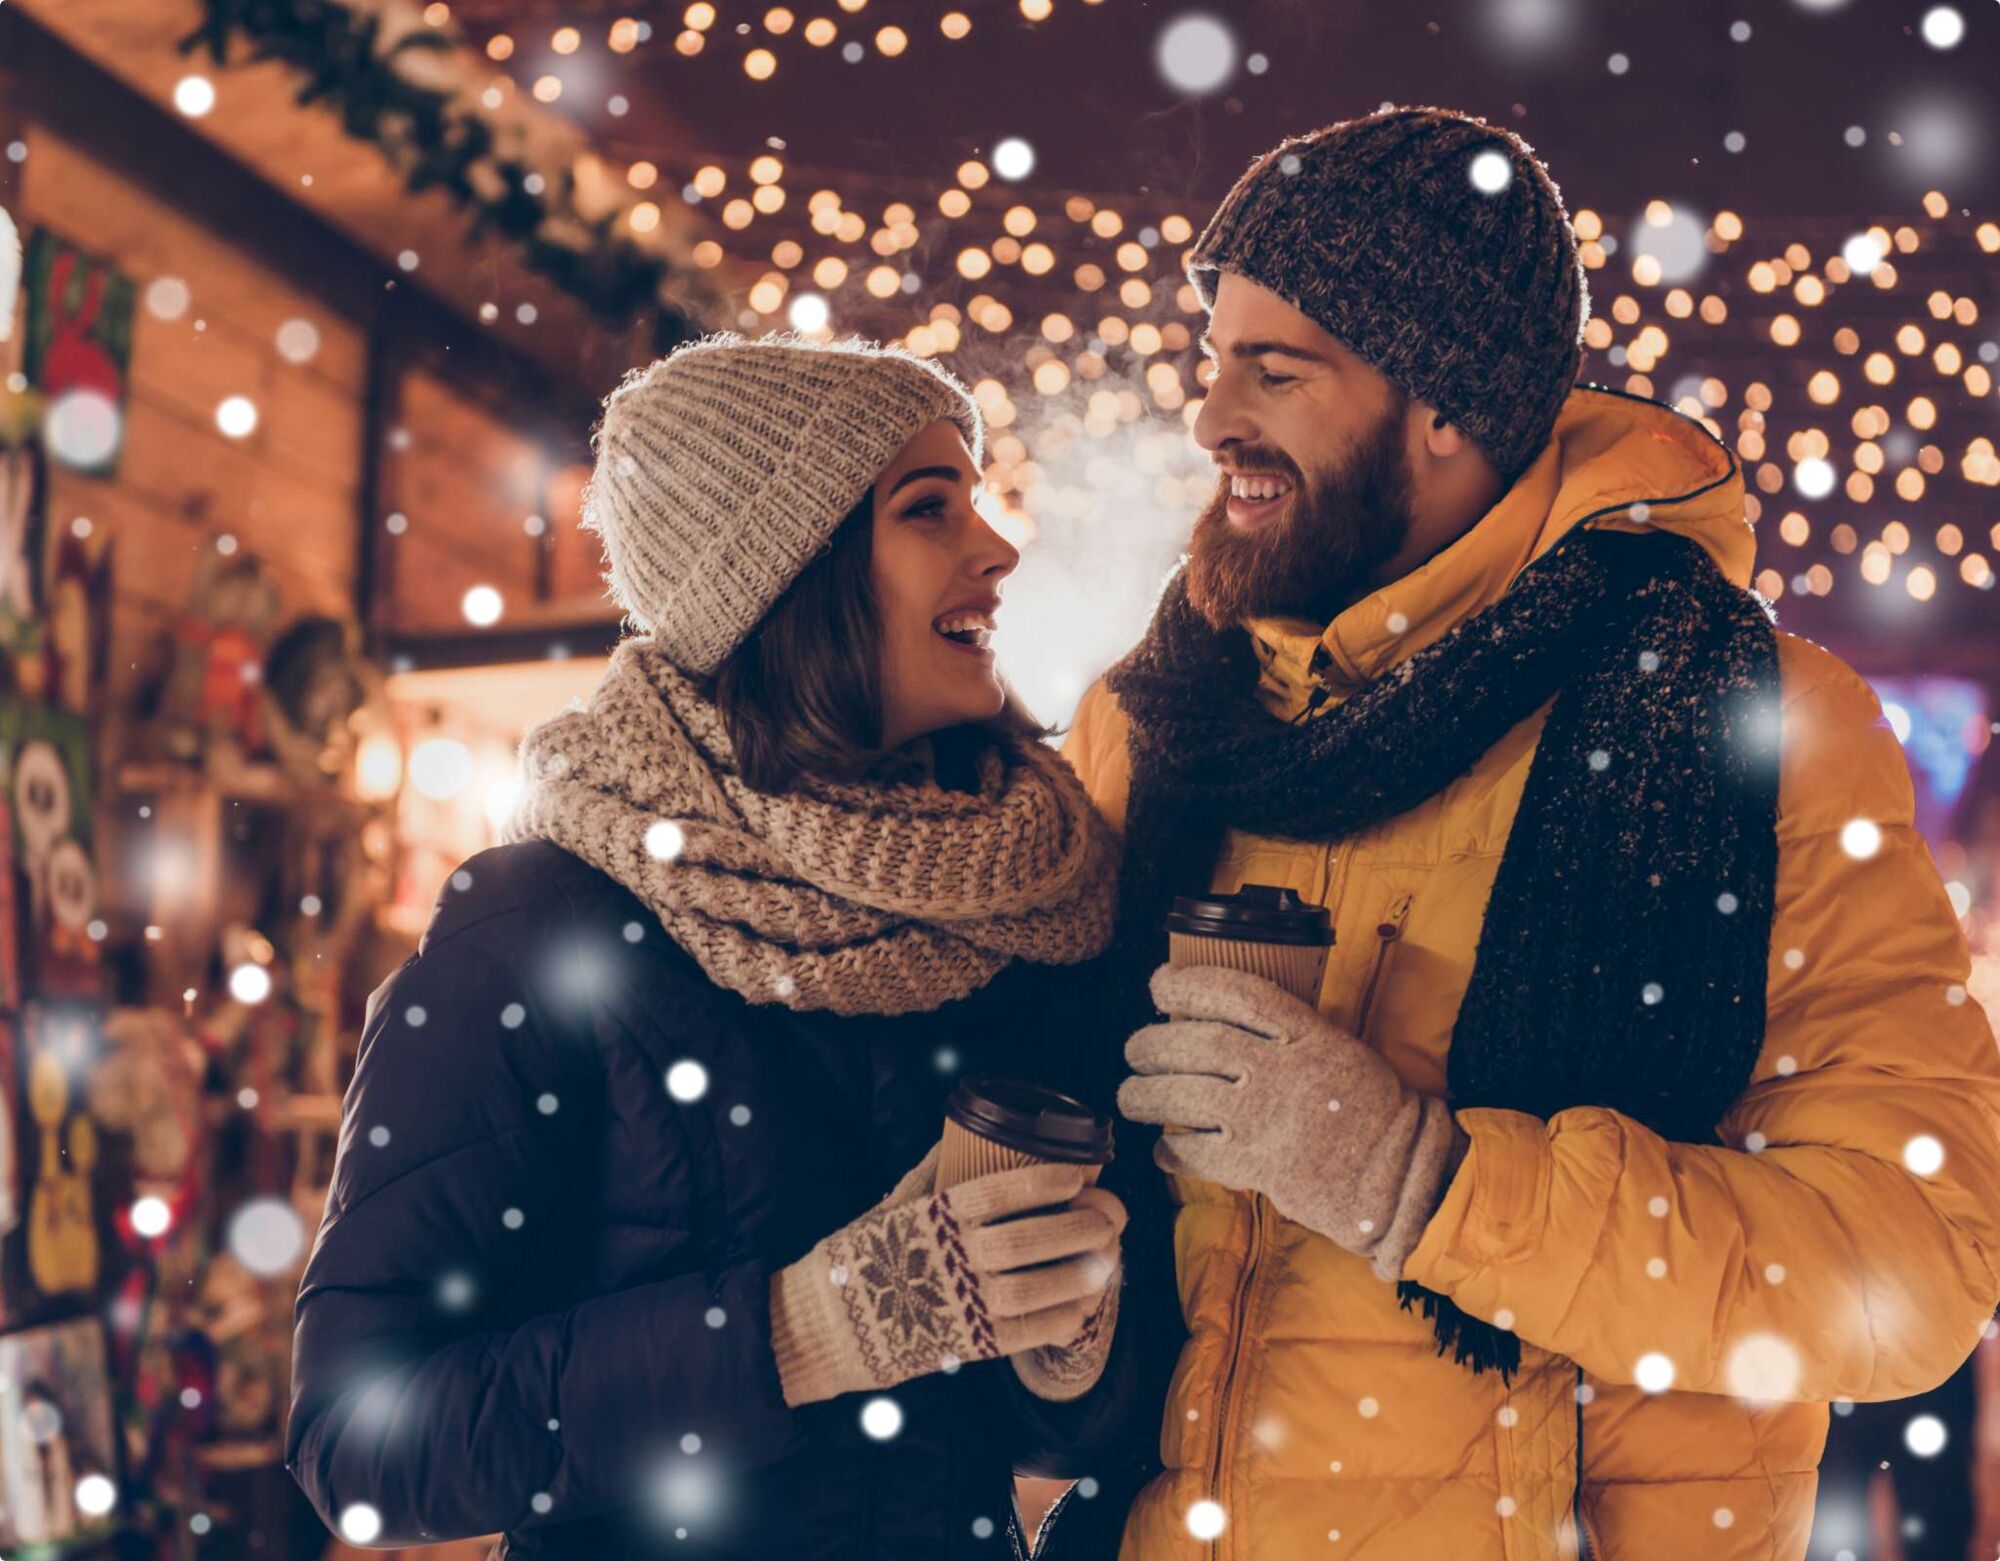 A couple embracing under festive lights.